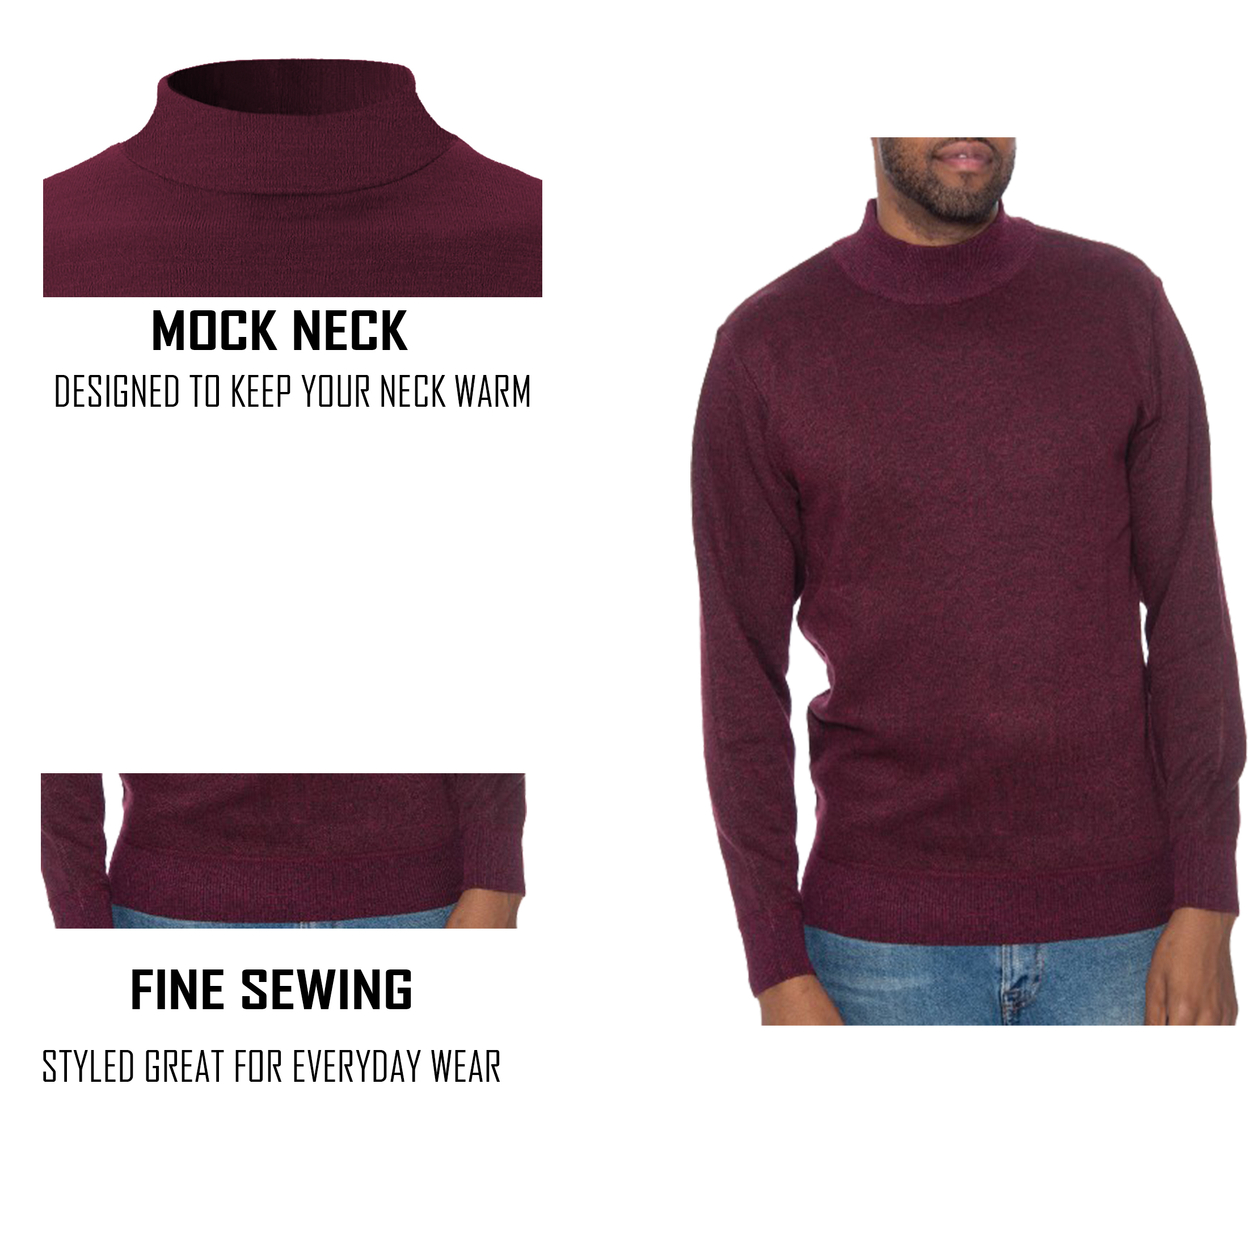 2-Pack: Men's Winter Warm Cozy Knit Slim Fit Mock Neck Sweater - Black & Navy, Large